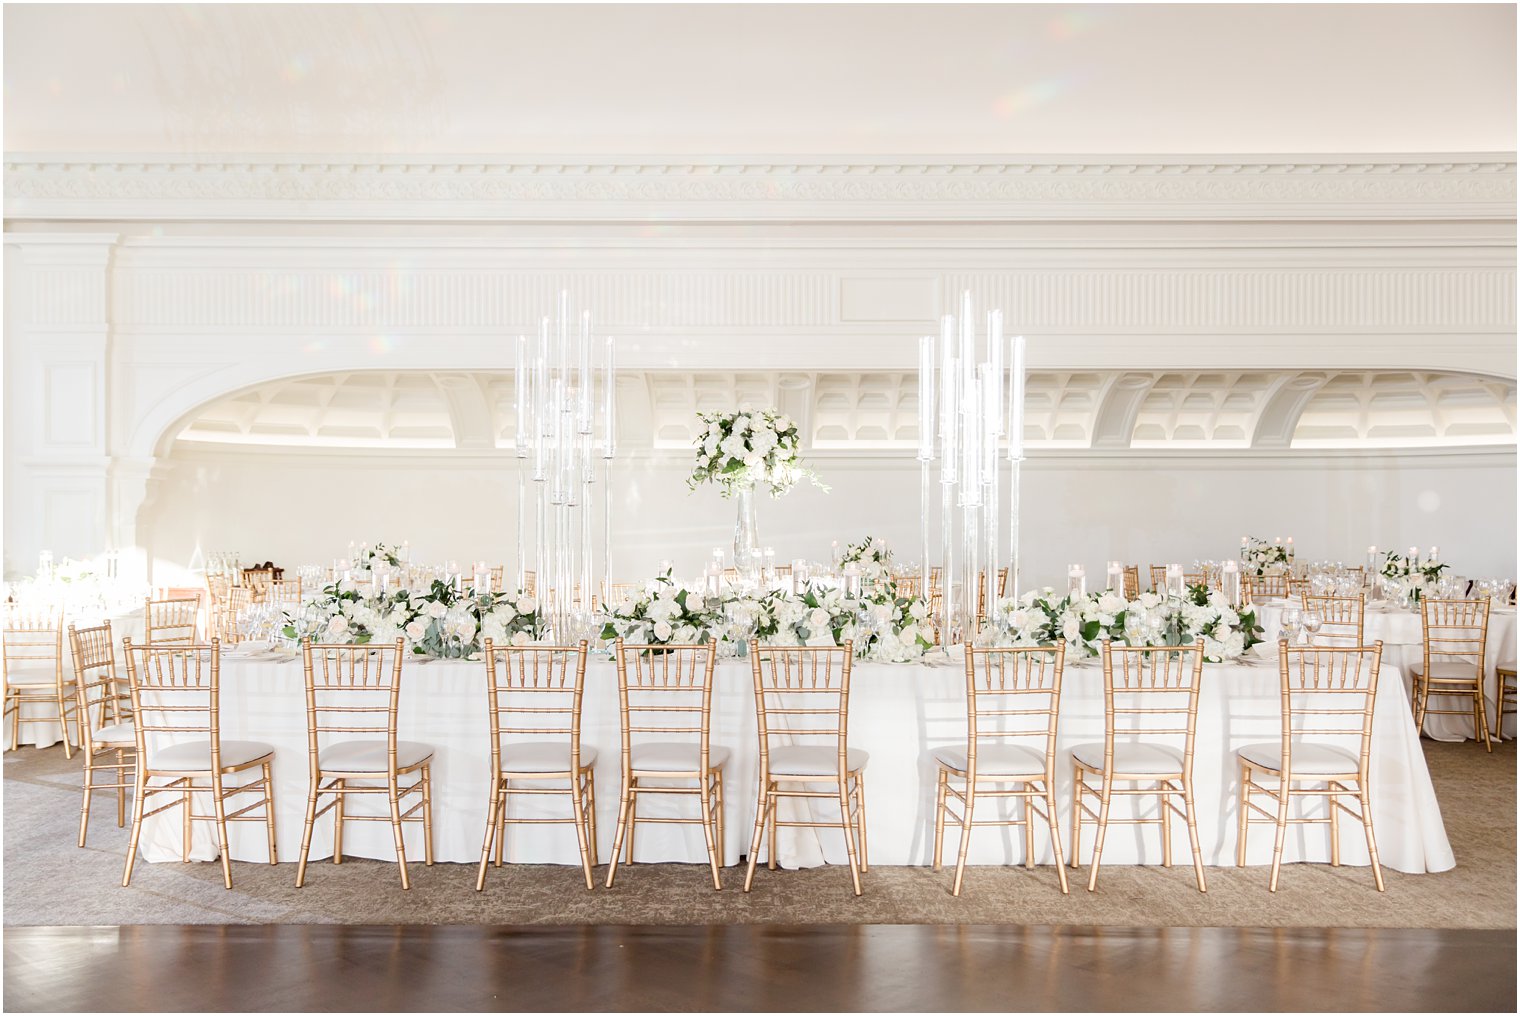 Banquet table at Ballroom at Park Chateau Estate Wedding Reception